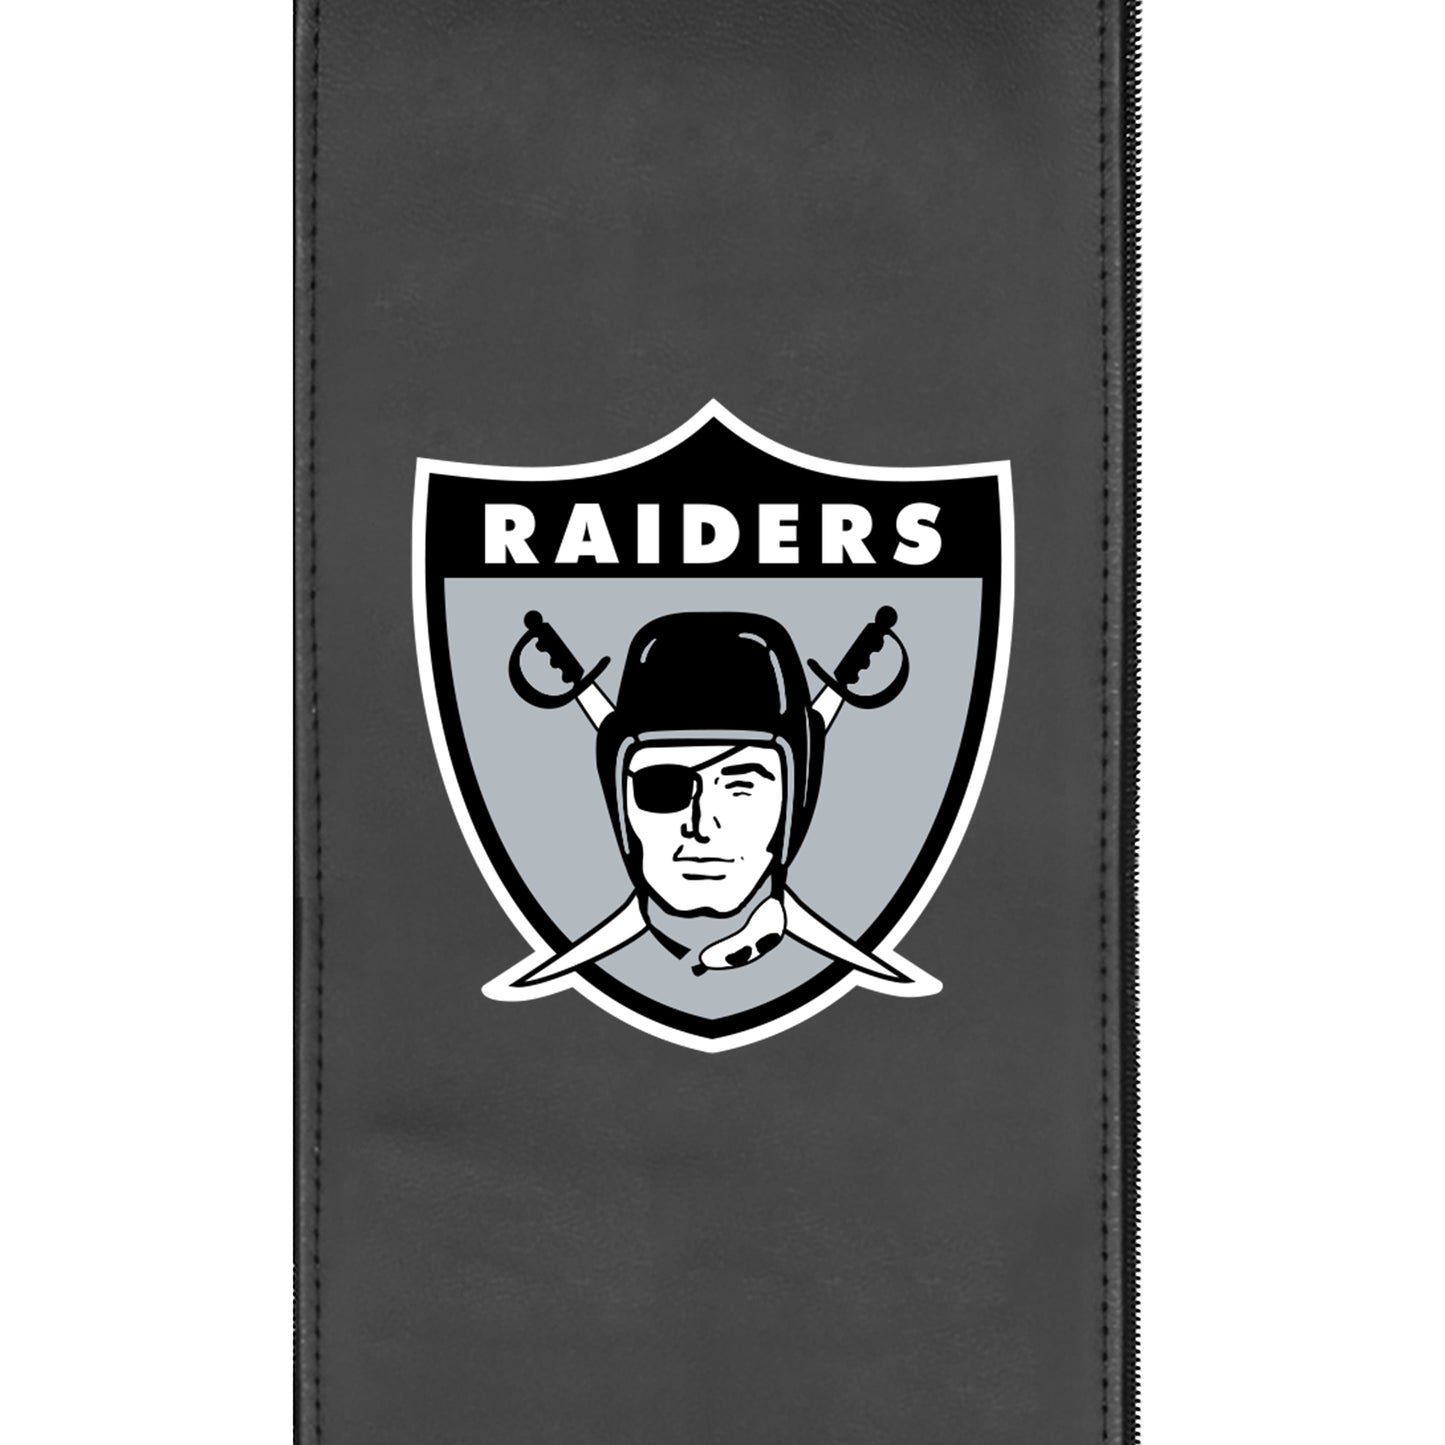 Silver Club Chair with Las Vegas Raiders Classic Logo